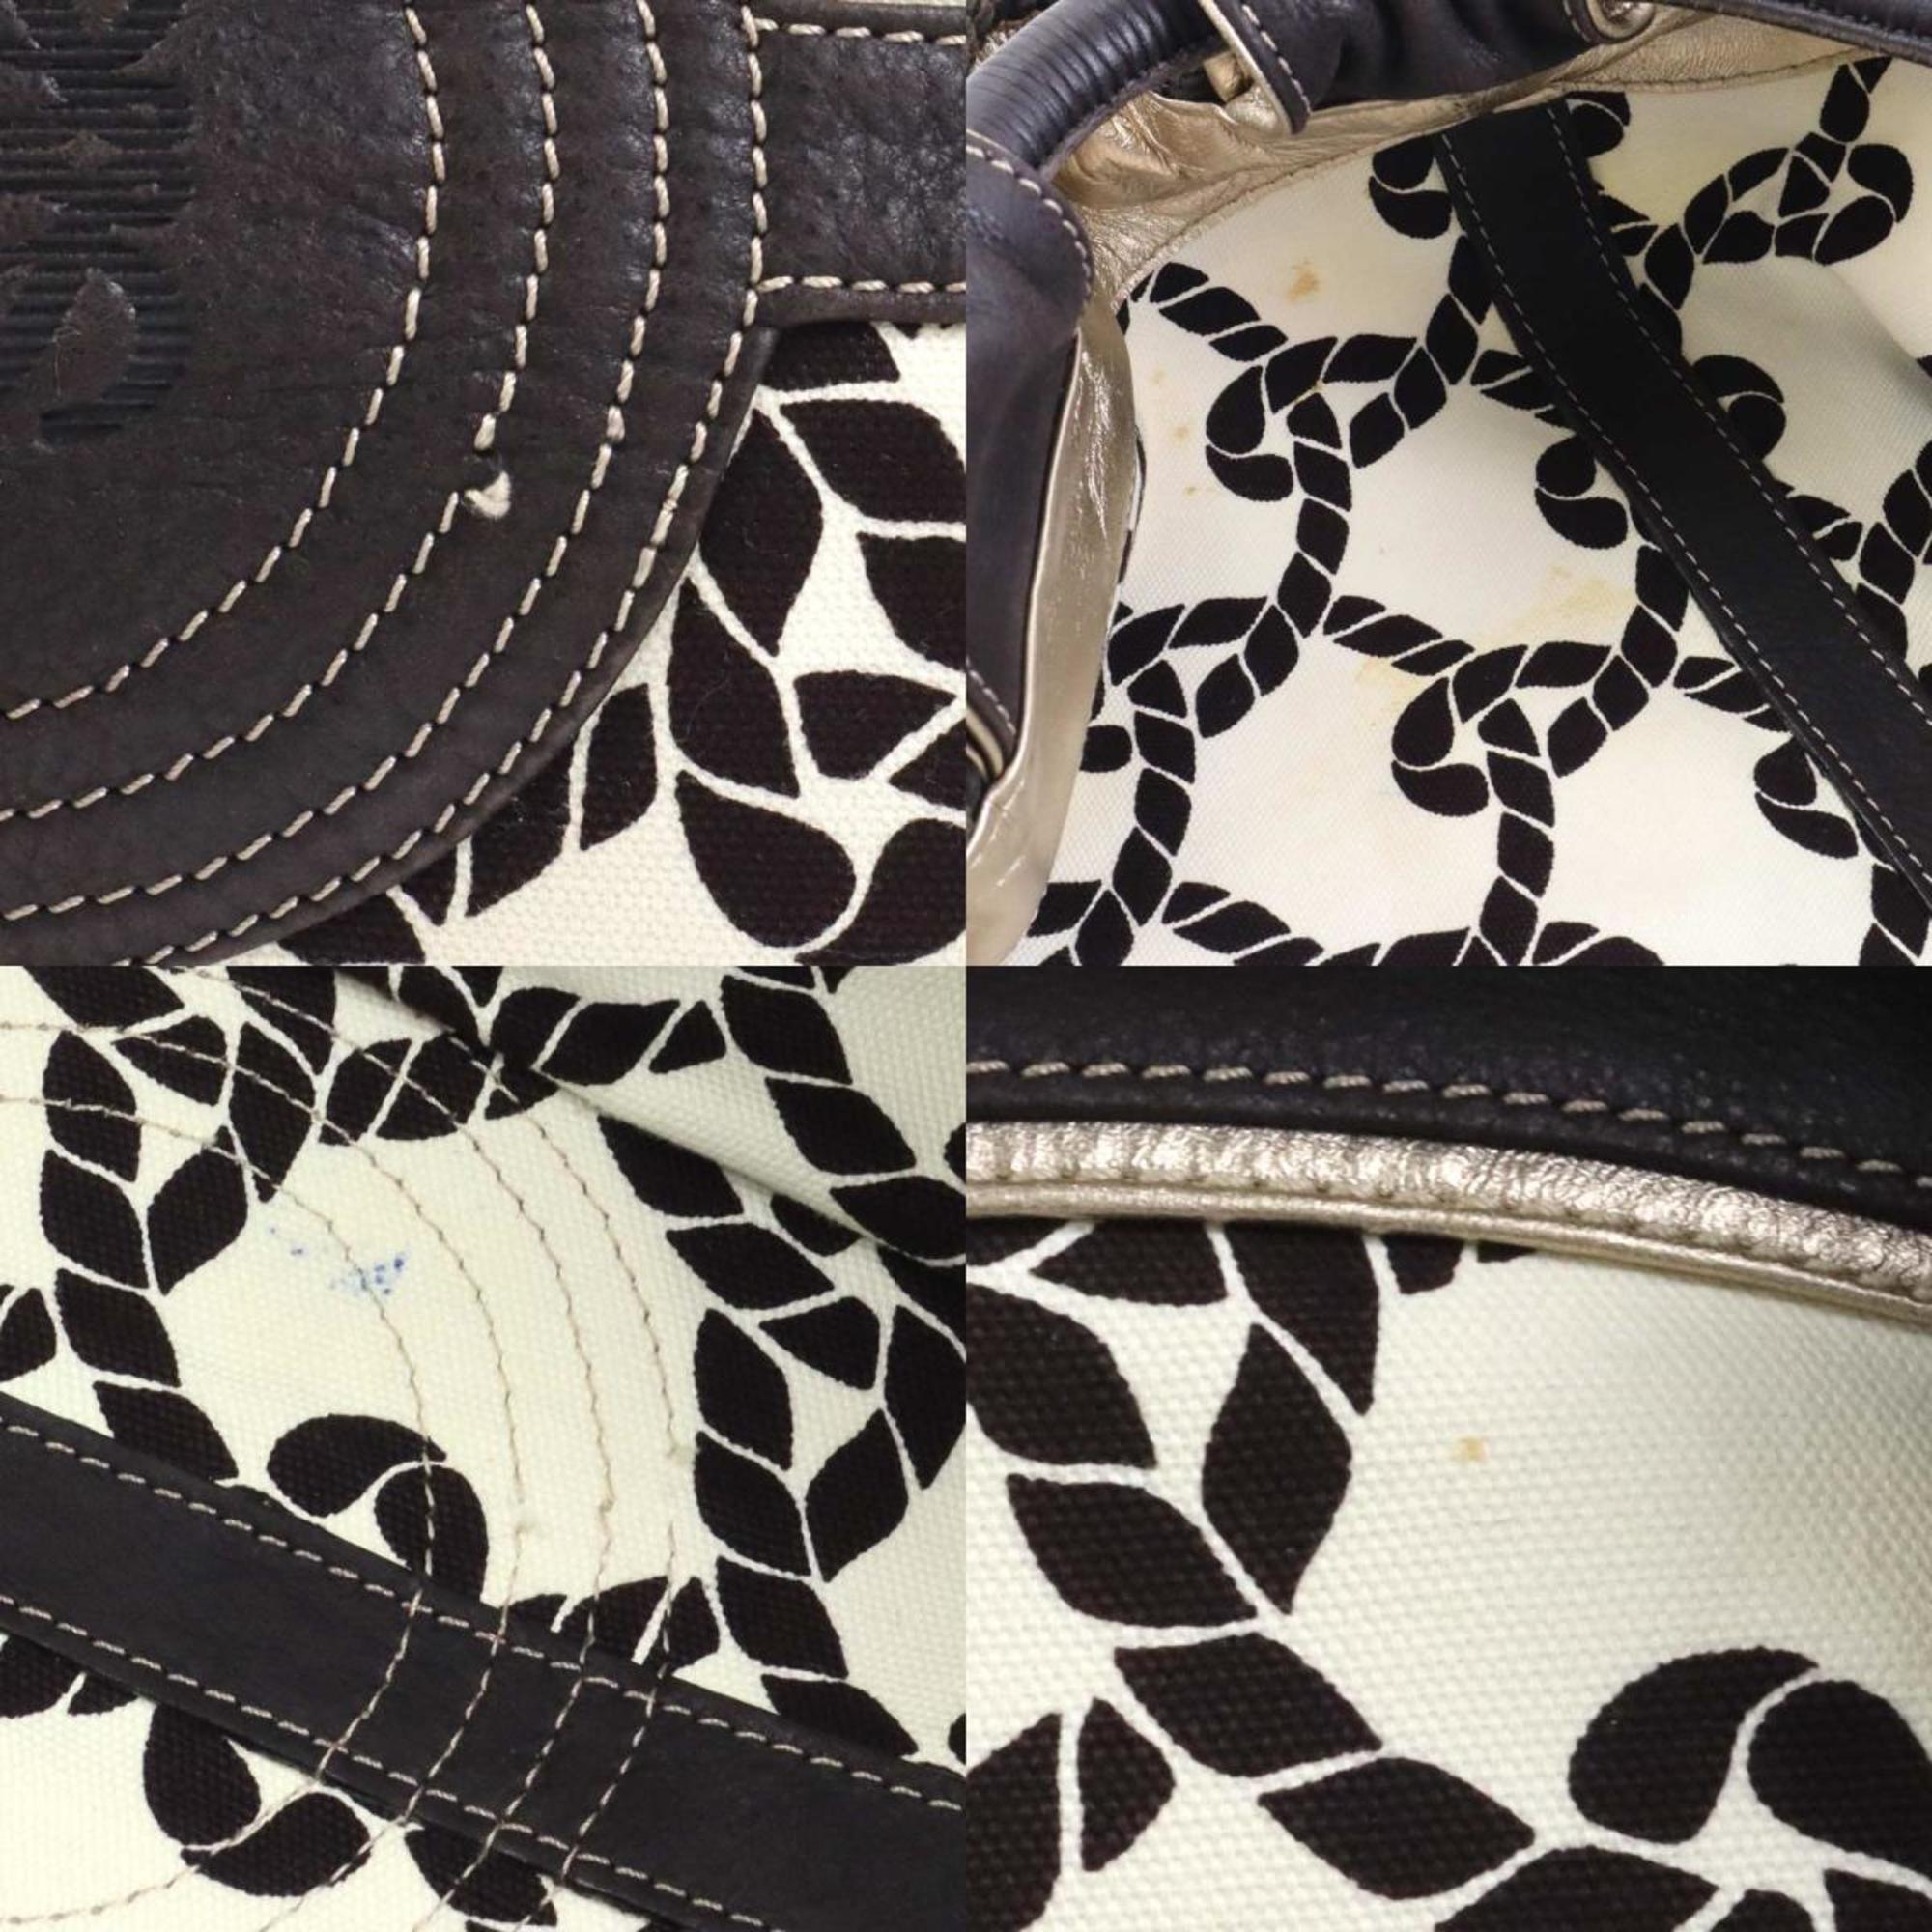 LOEWE Handbag Nappa Aire Canvas/Leather Off-White/Dark Brown Women's